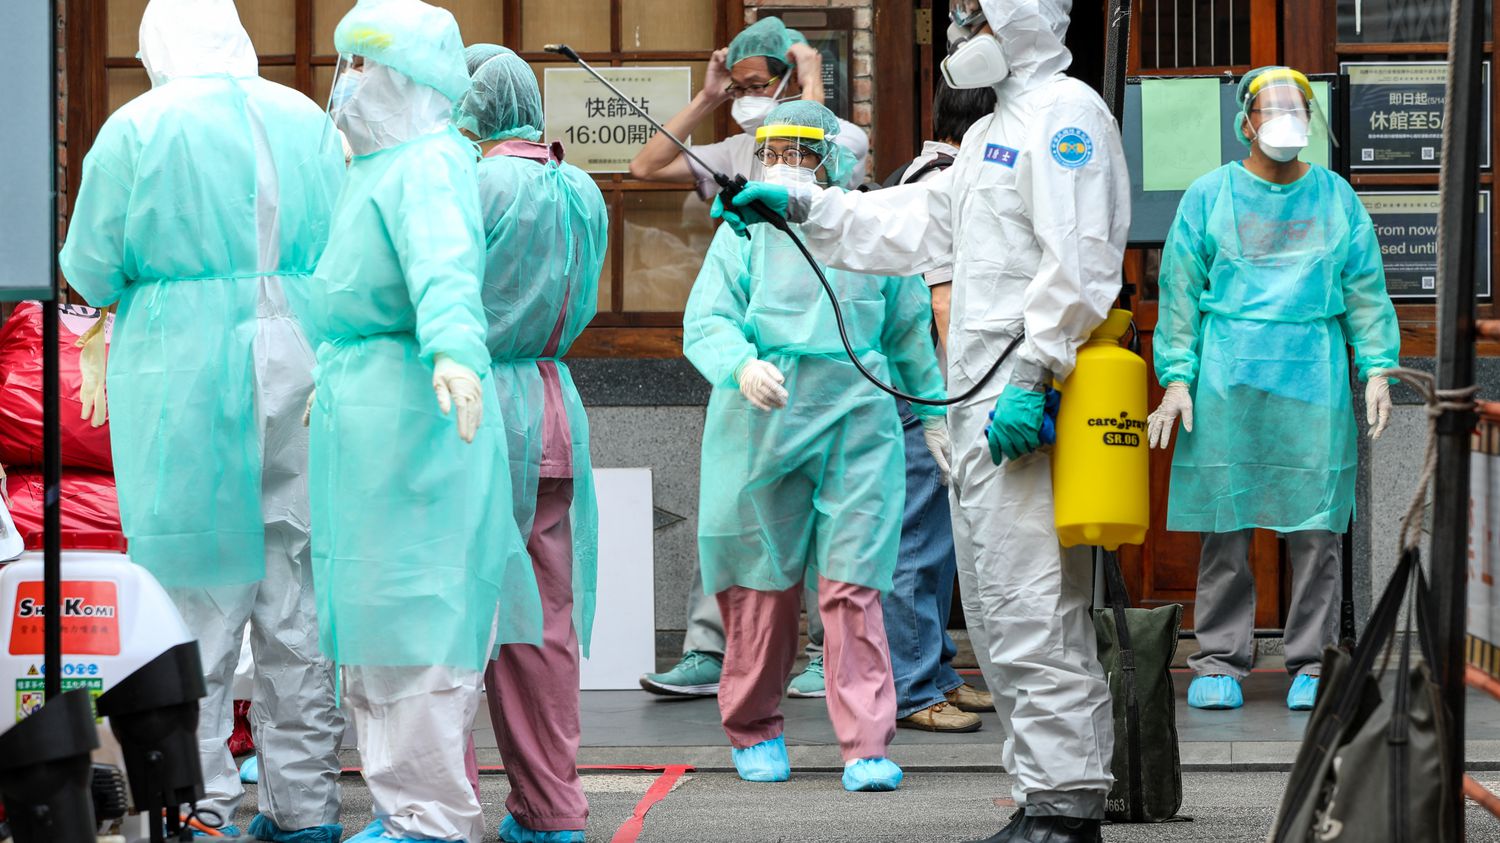 Japan, Singapore, Taiwan ... these Asian countries facing a new wave of epidemics

